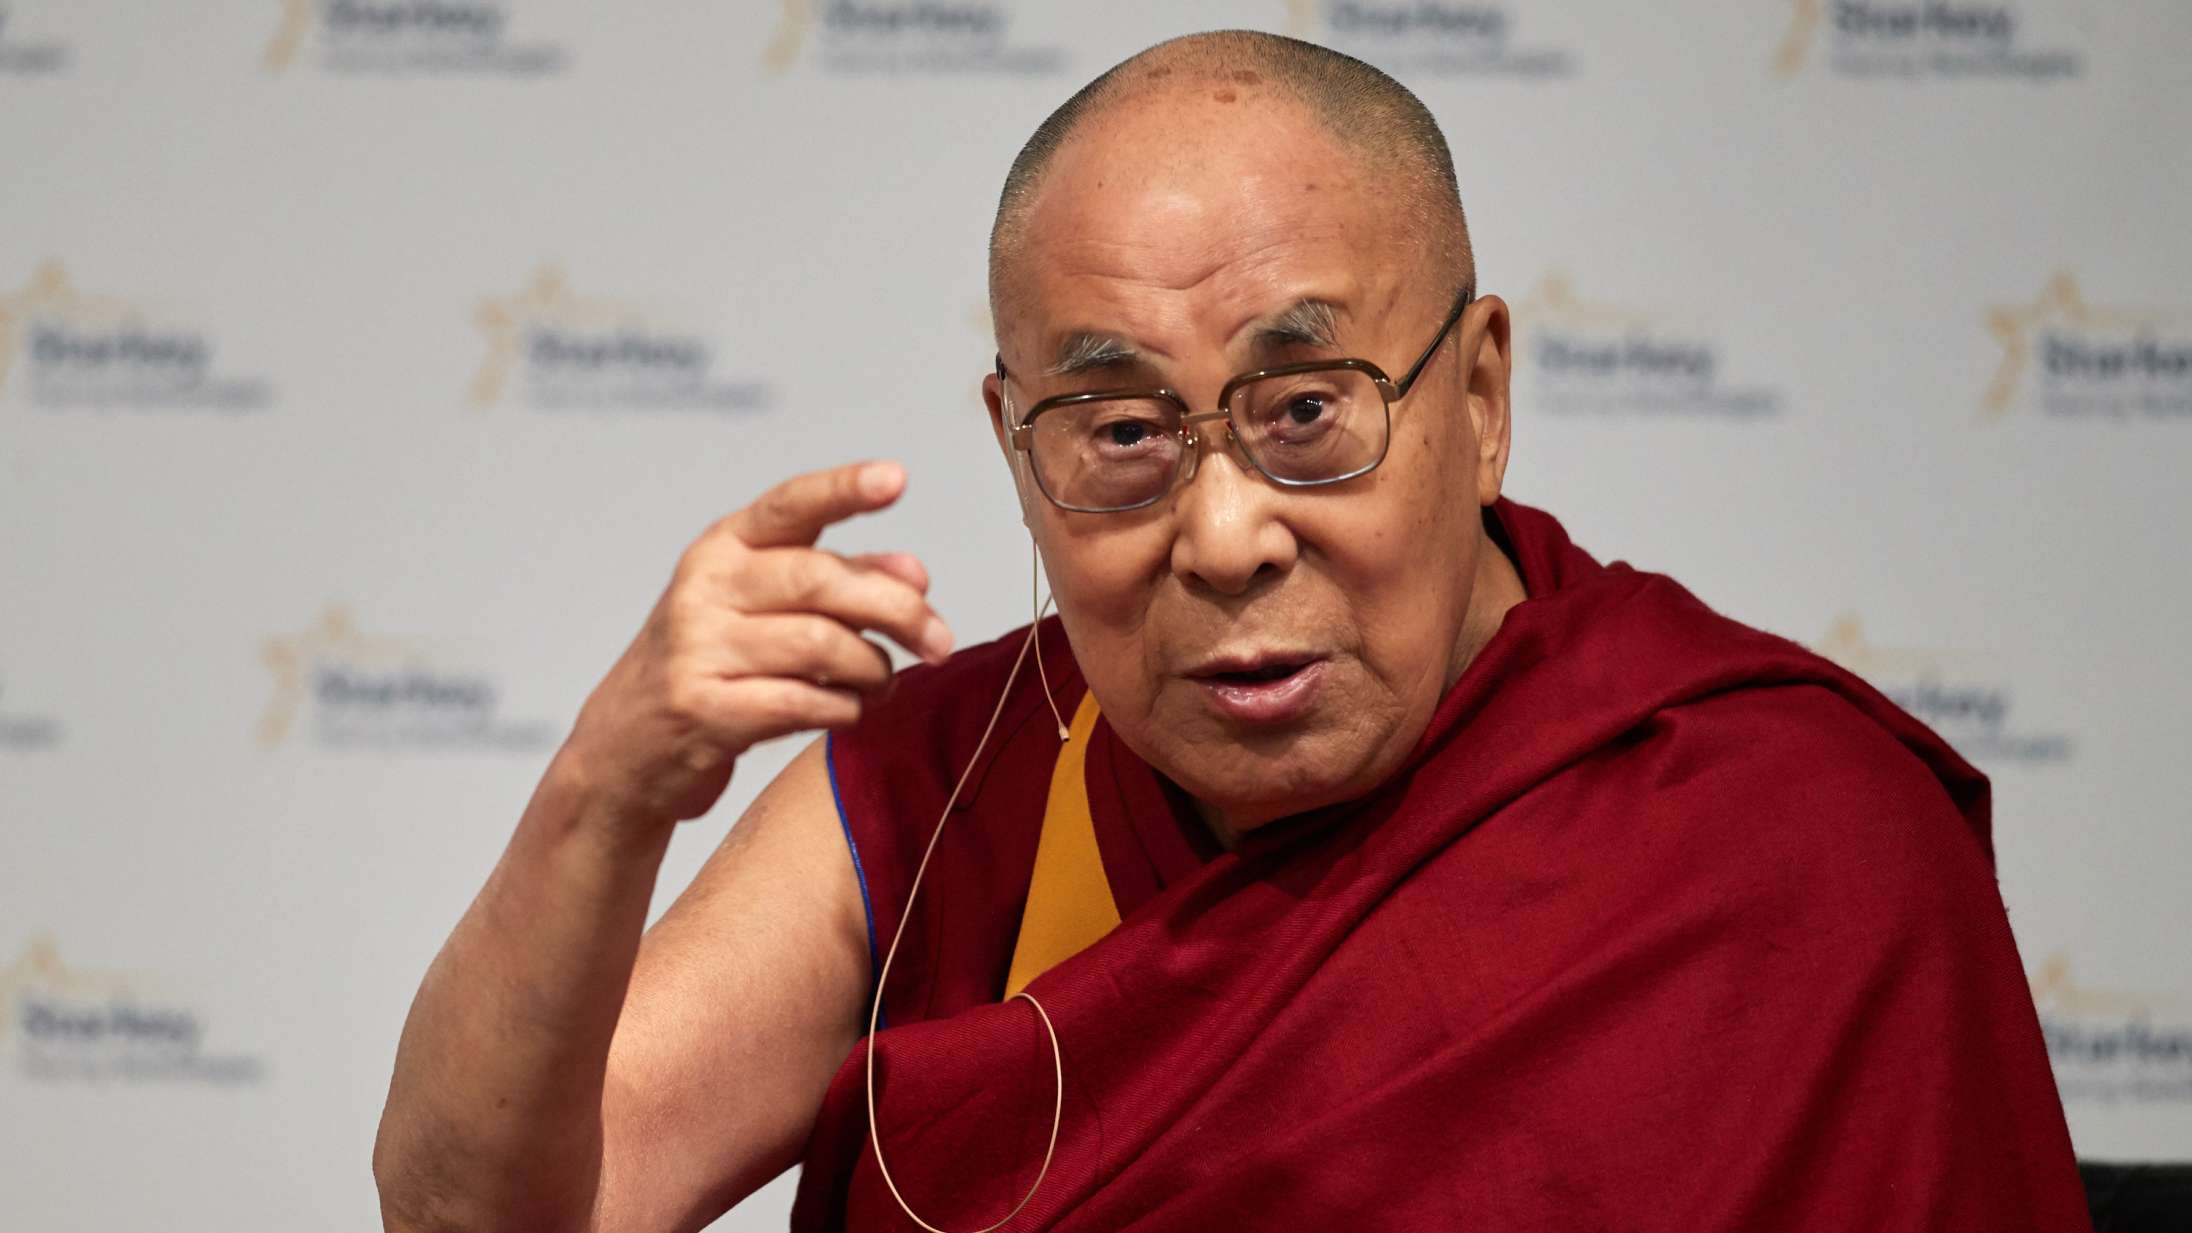 Dalai Lama springer ud som musiker med new age-albummet ’Inner World’